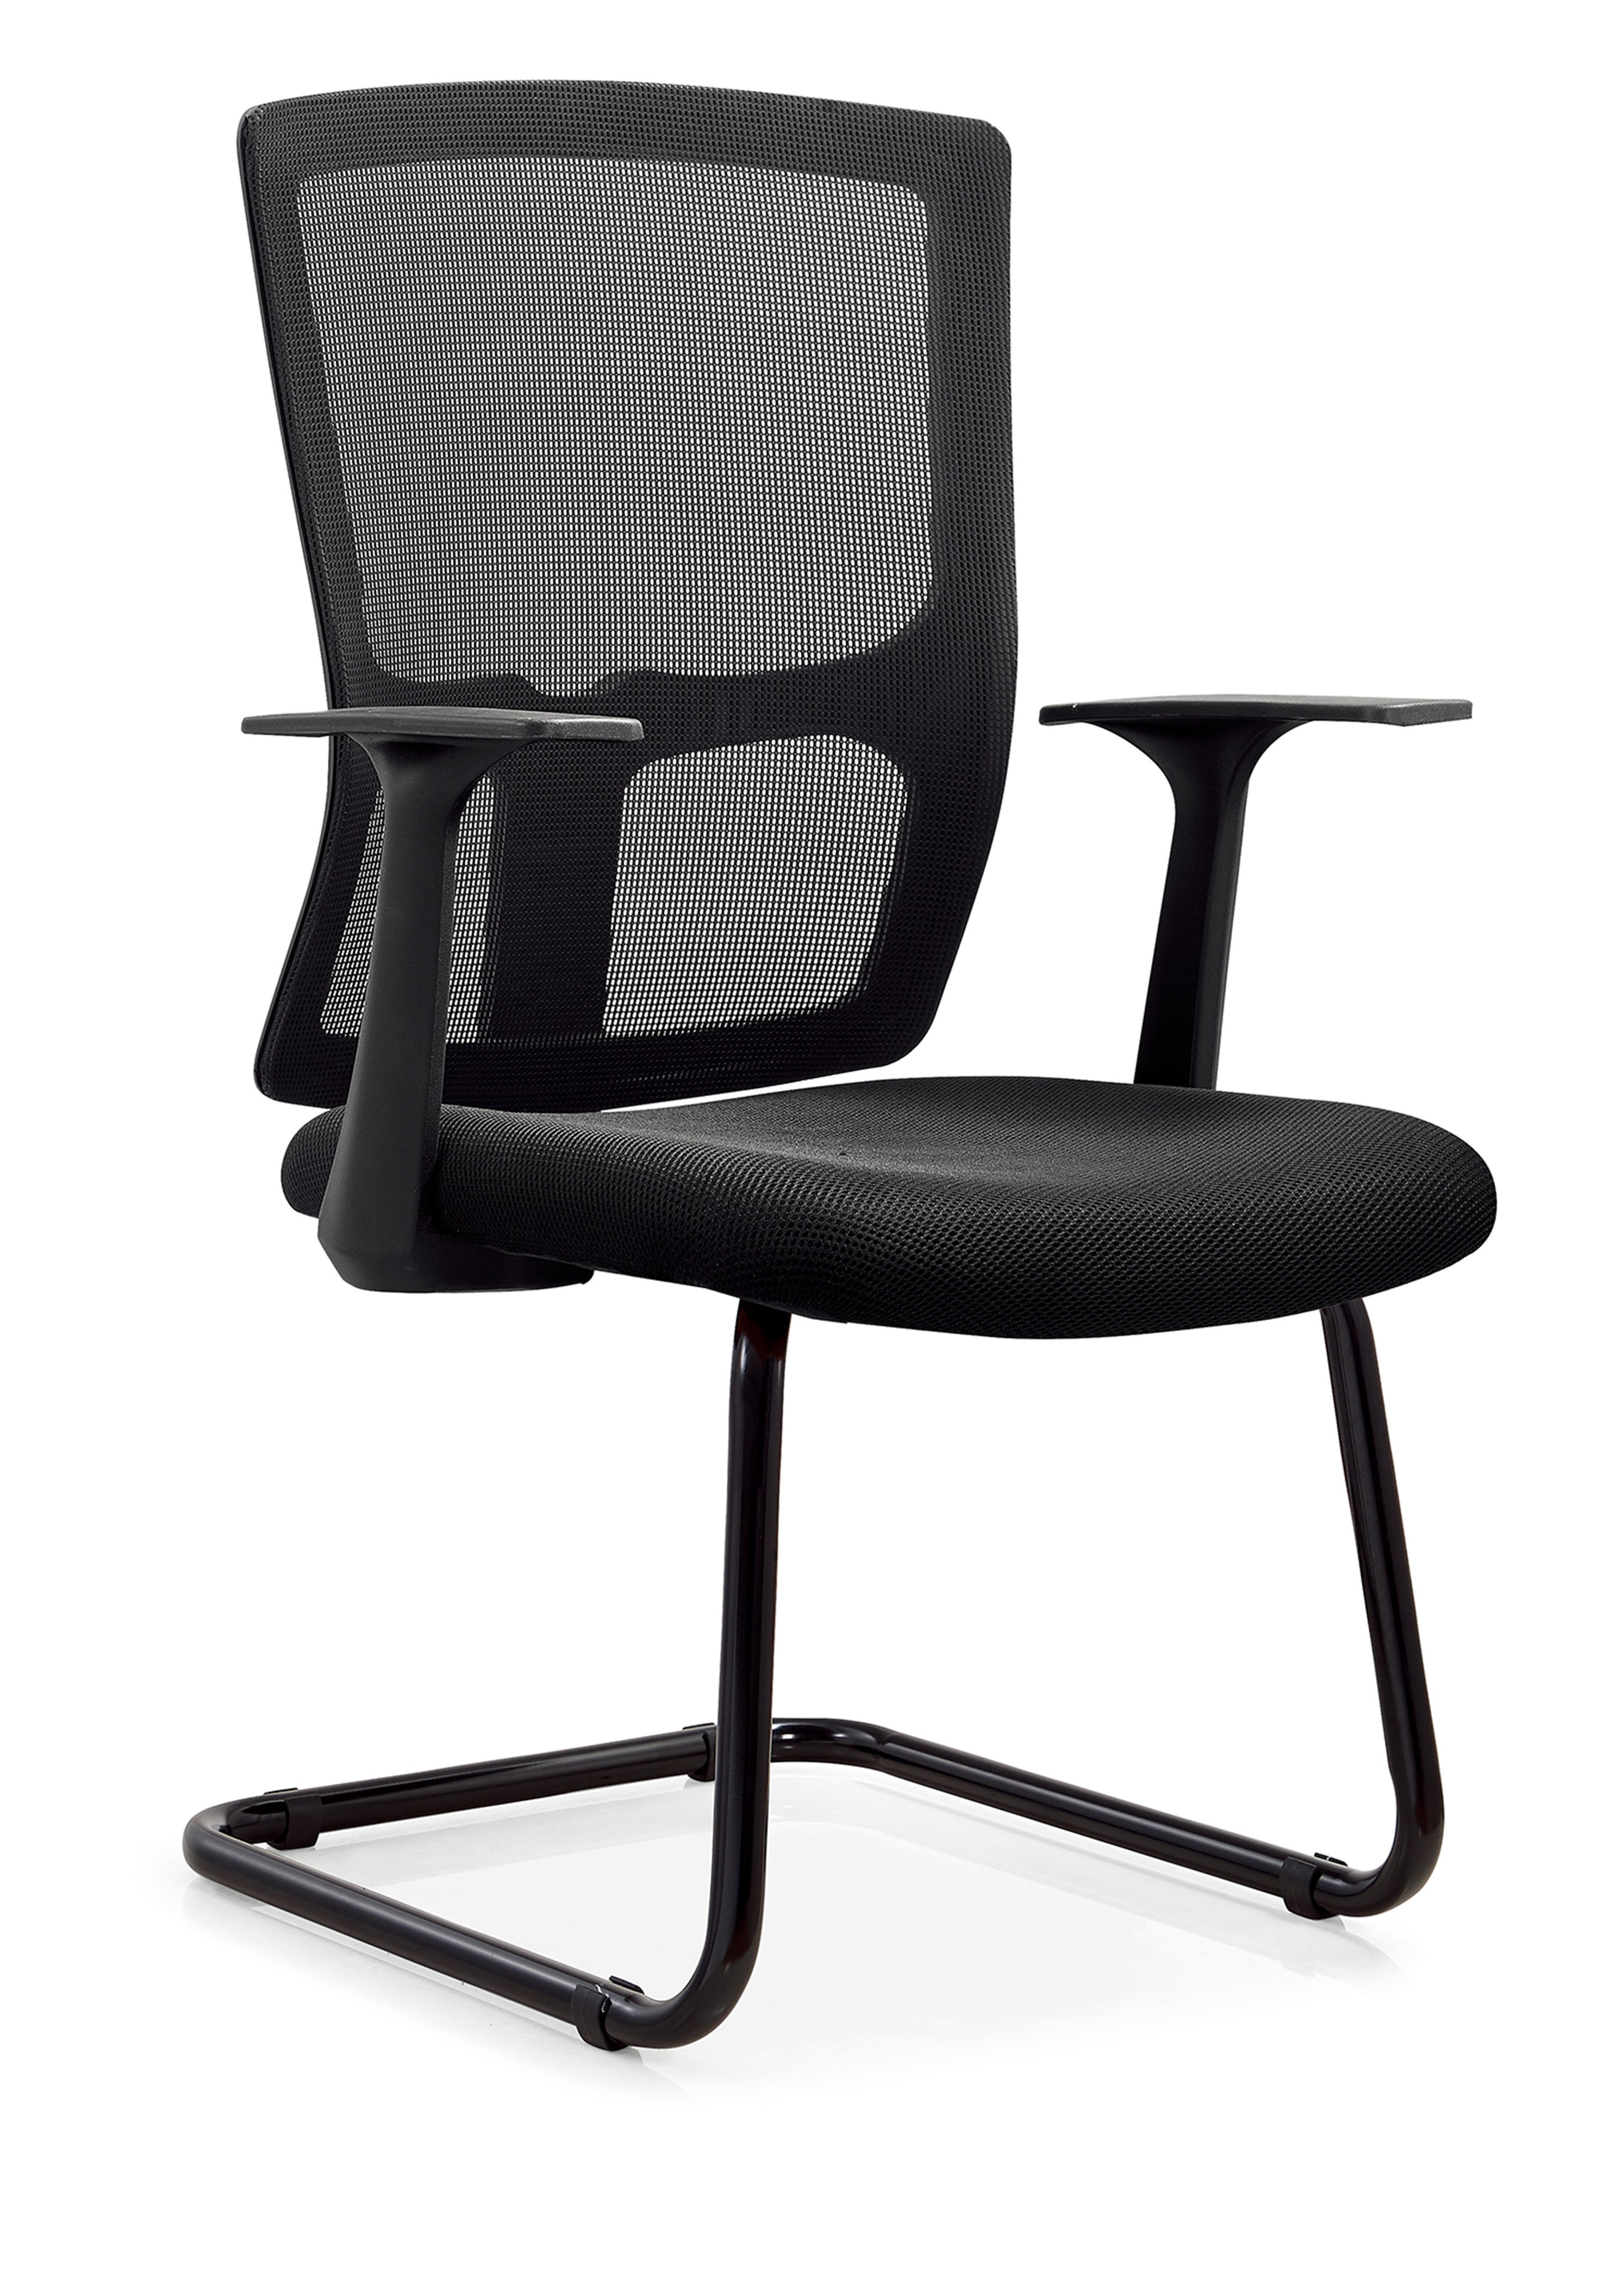 Newcity 524B 直销经济型新设计网办公会议椅最优质彩色定制中靠背优质网椅供应商中国佛山